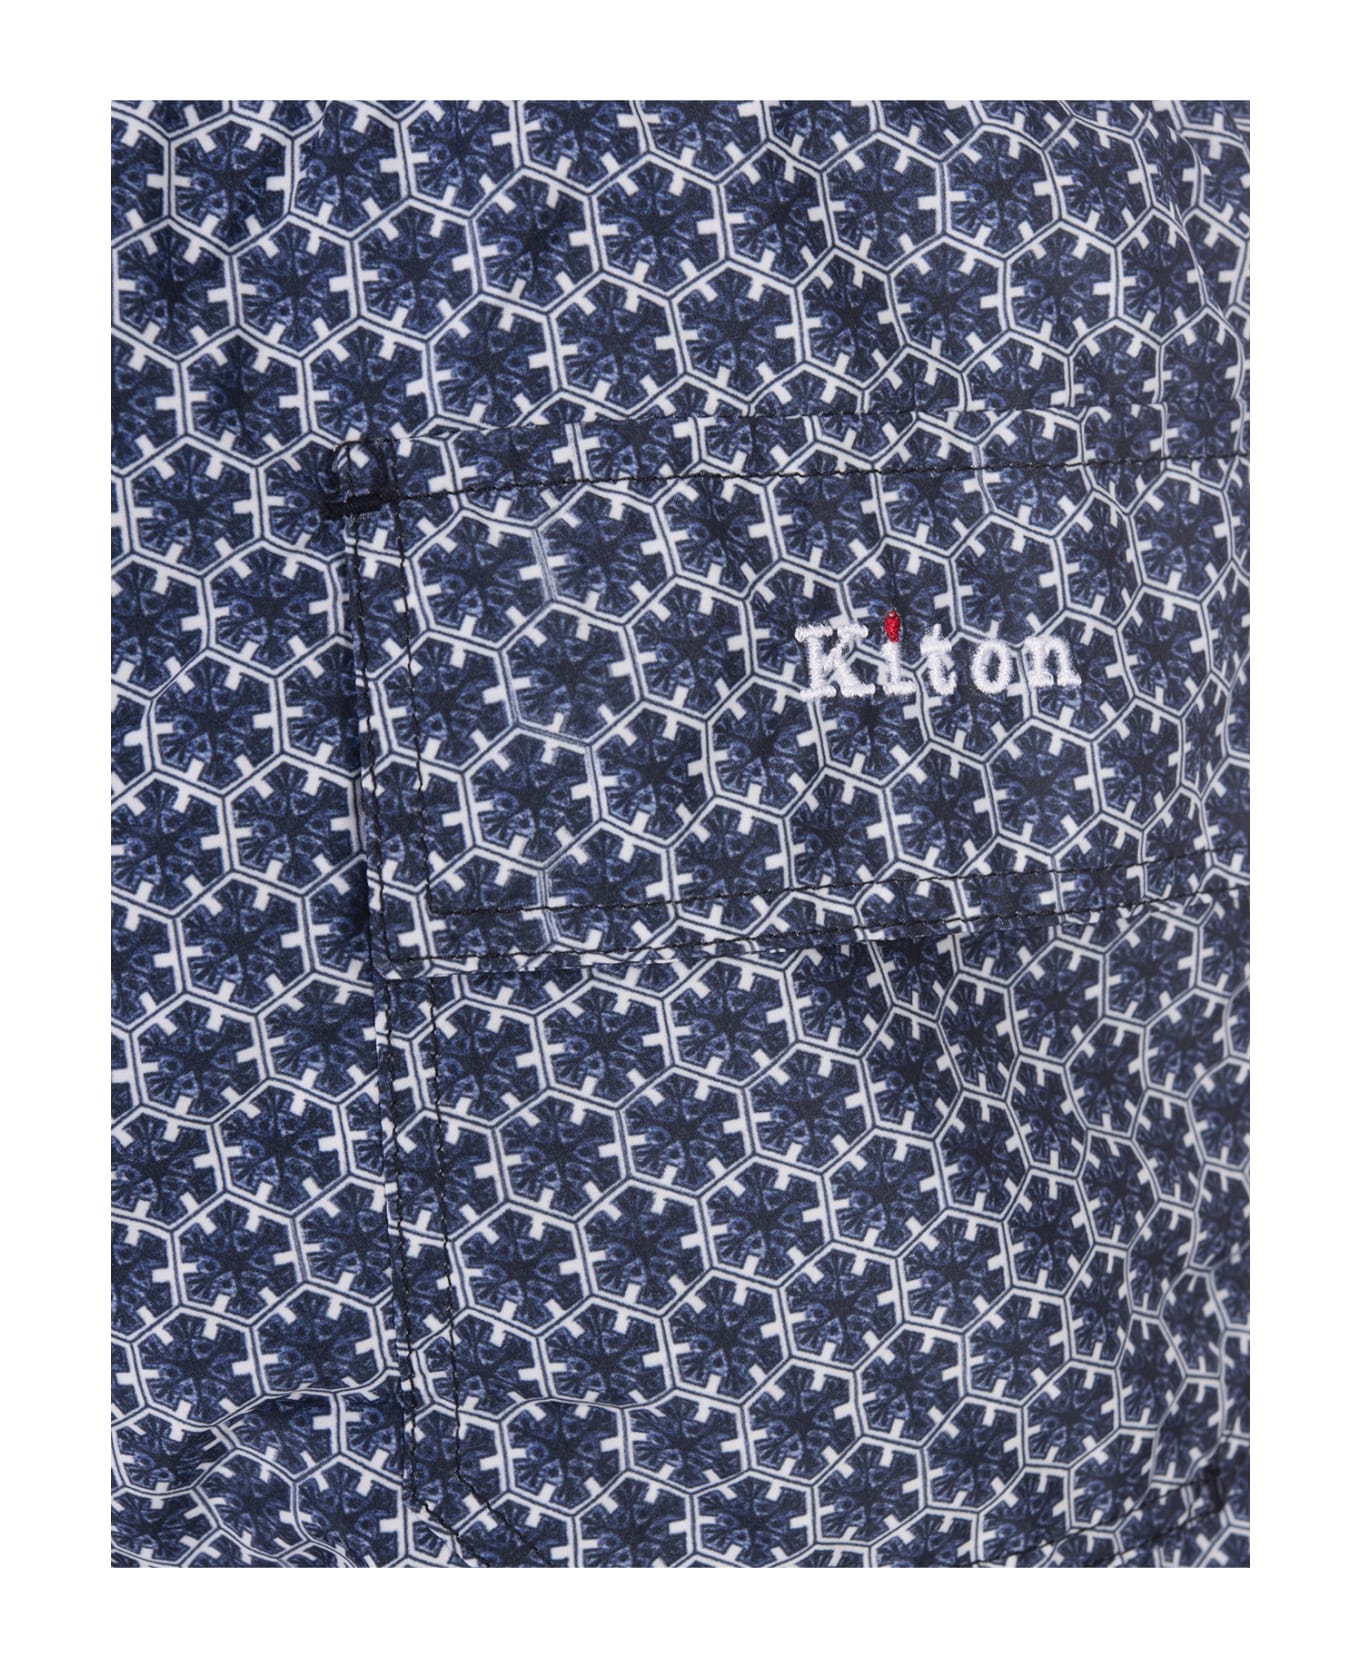 Kiton Navy Blue Swim Shorts With Geometric Floral Pattern - Blue